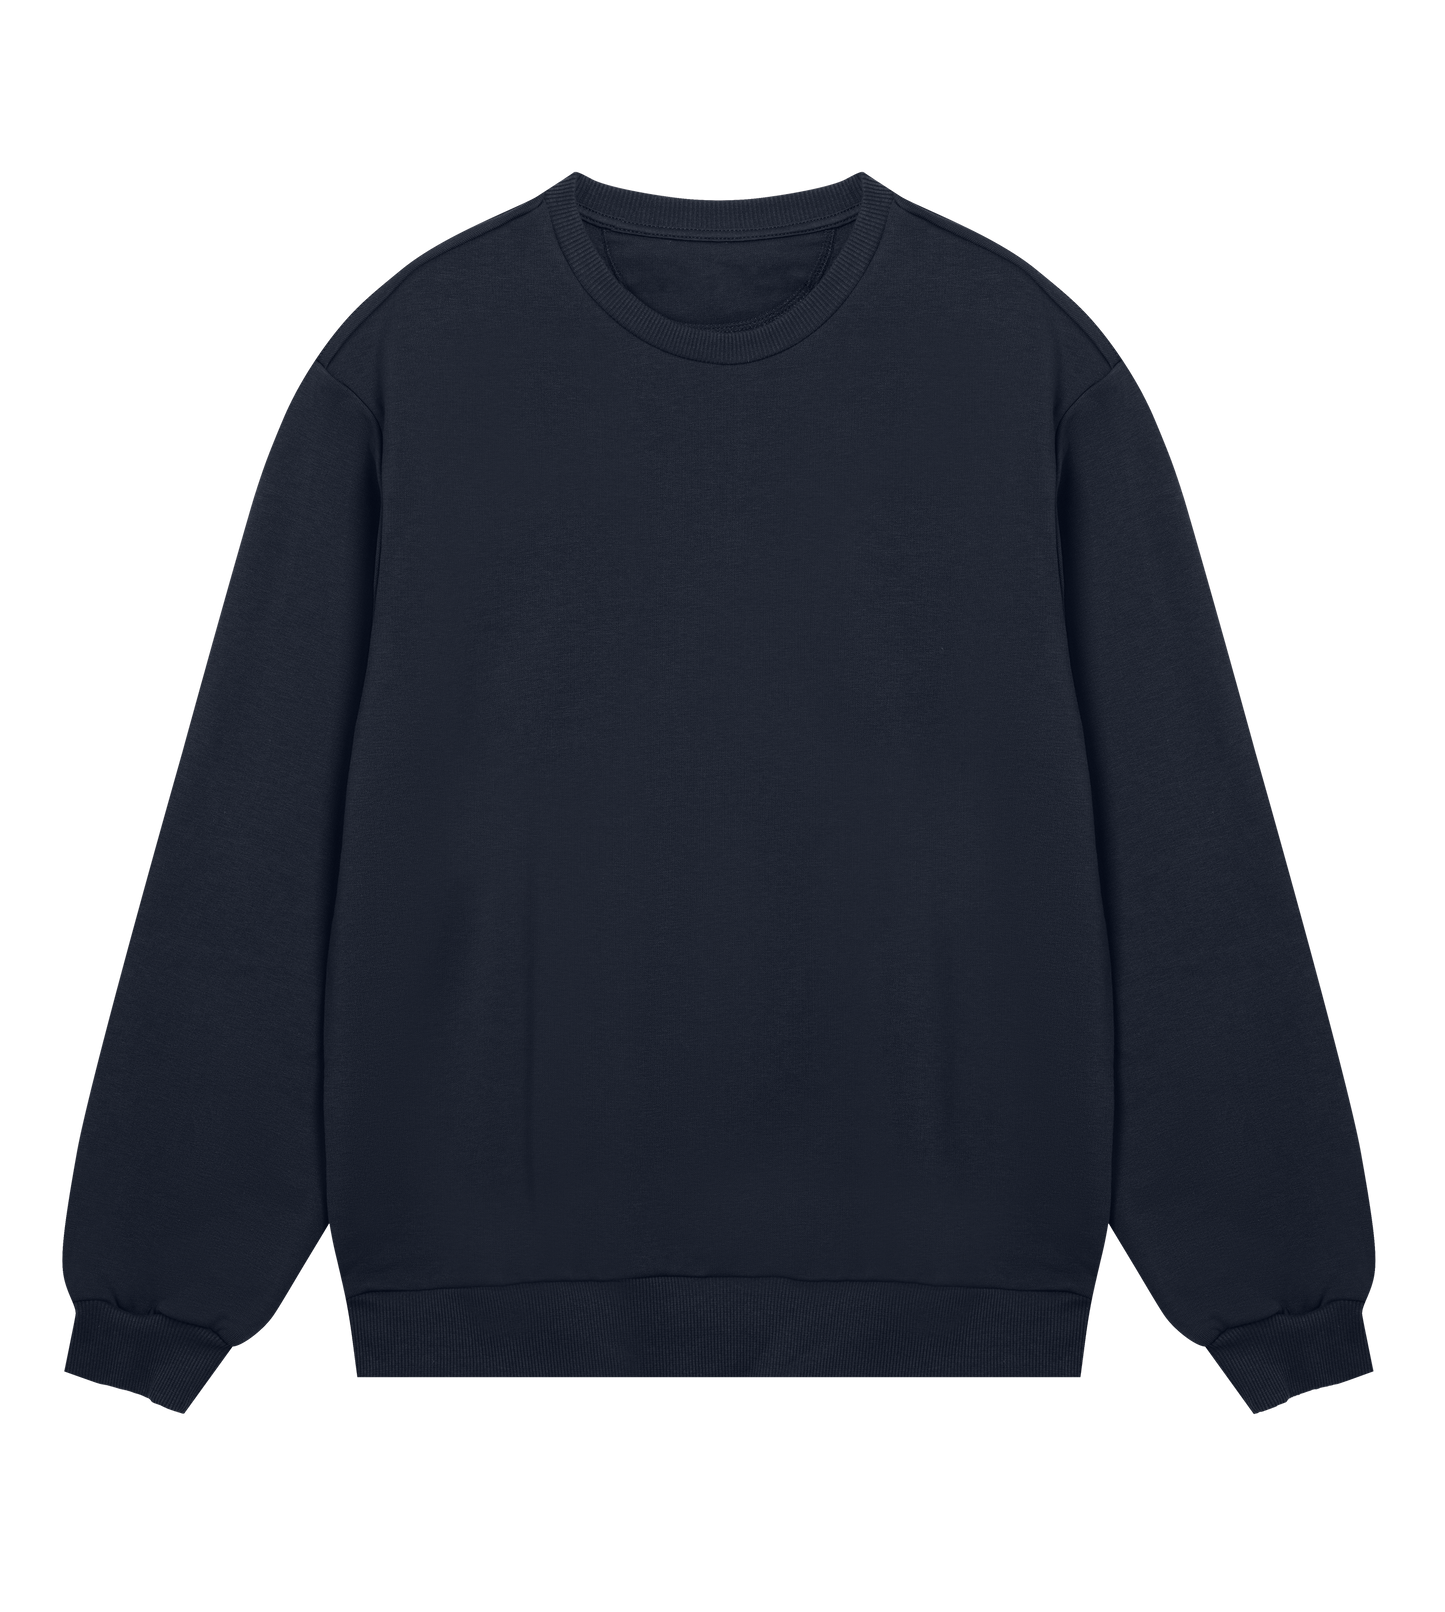 WIRD WILD Backprint - Mens Regular Sweatshirt